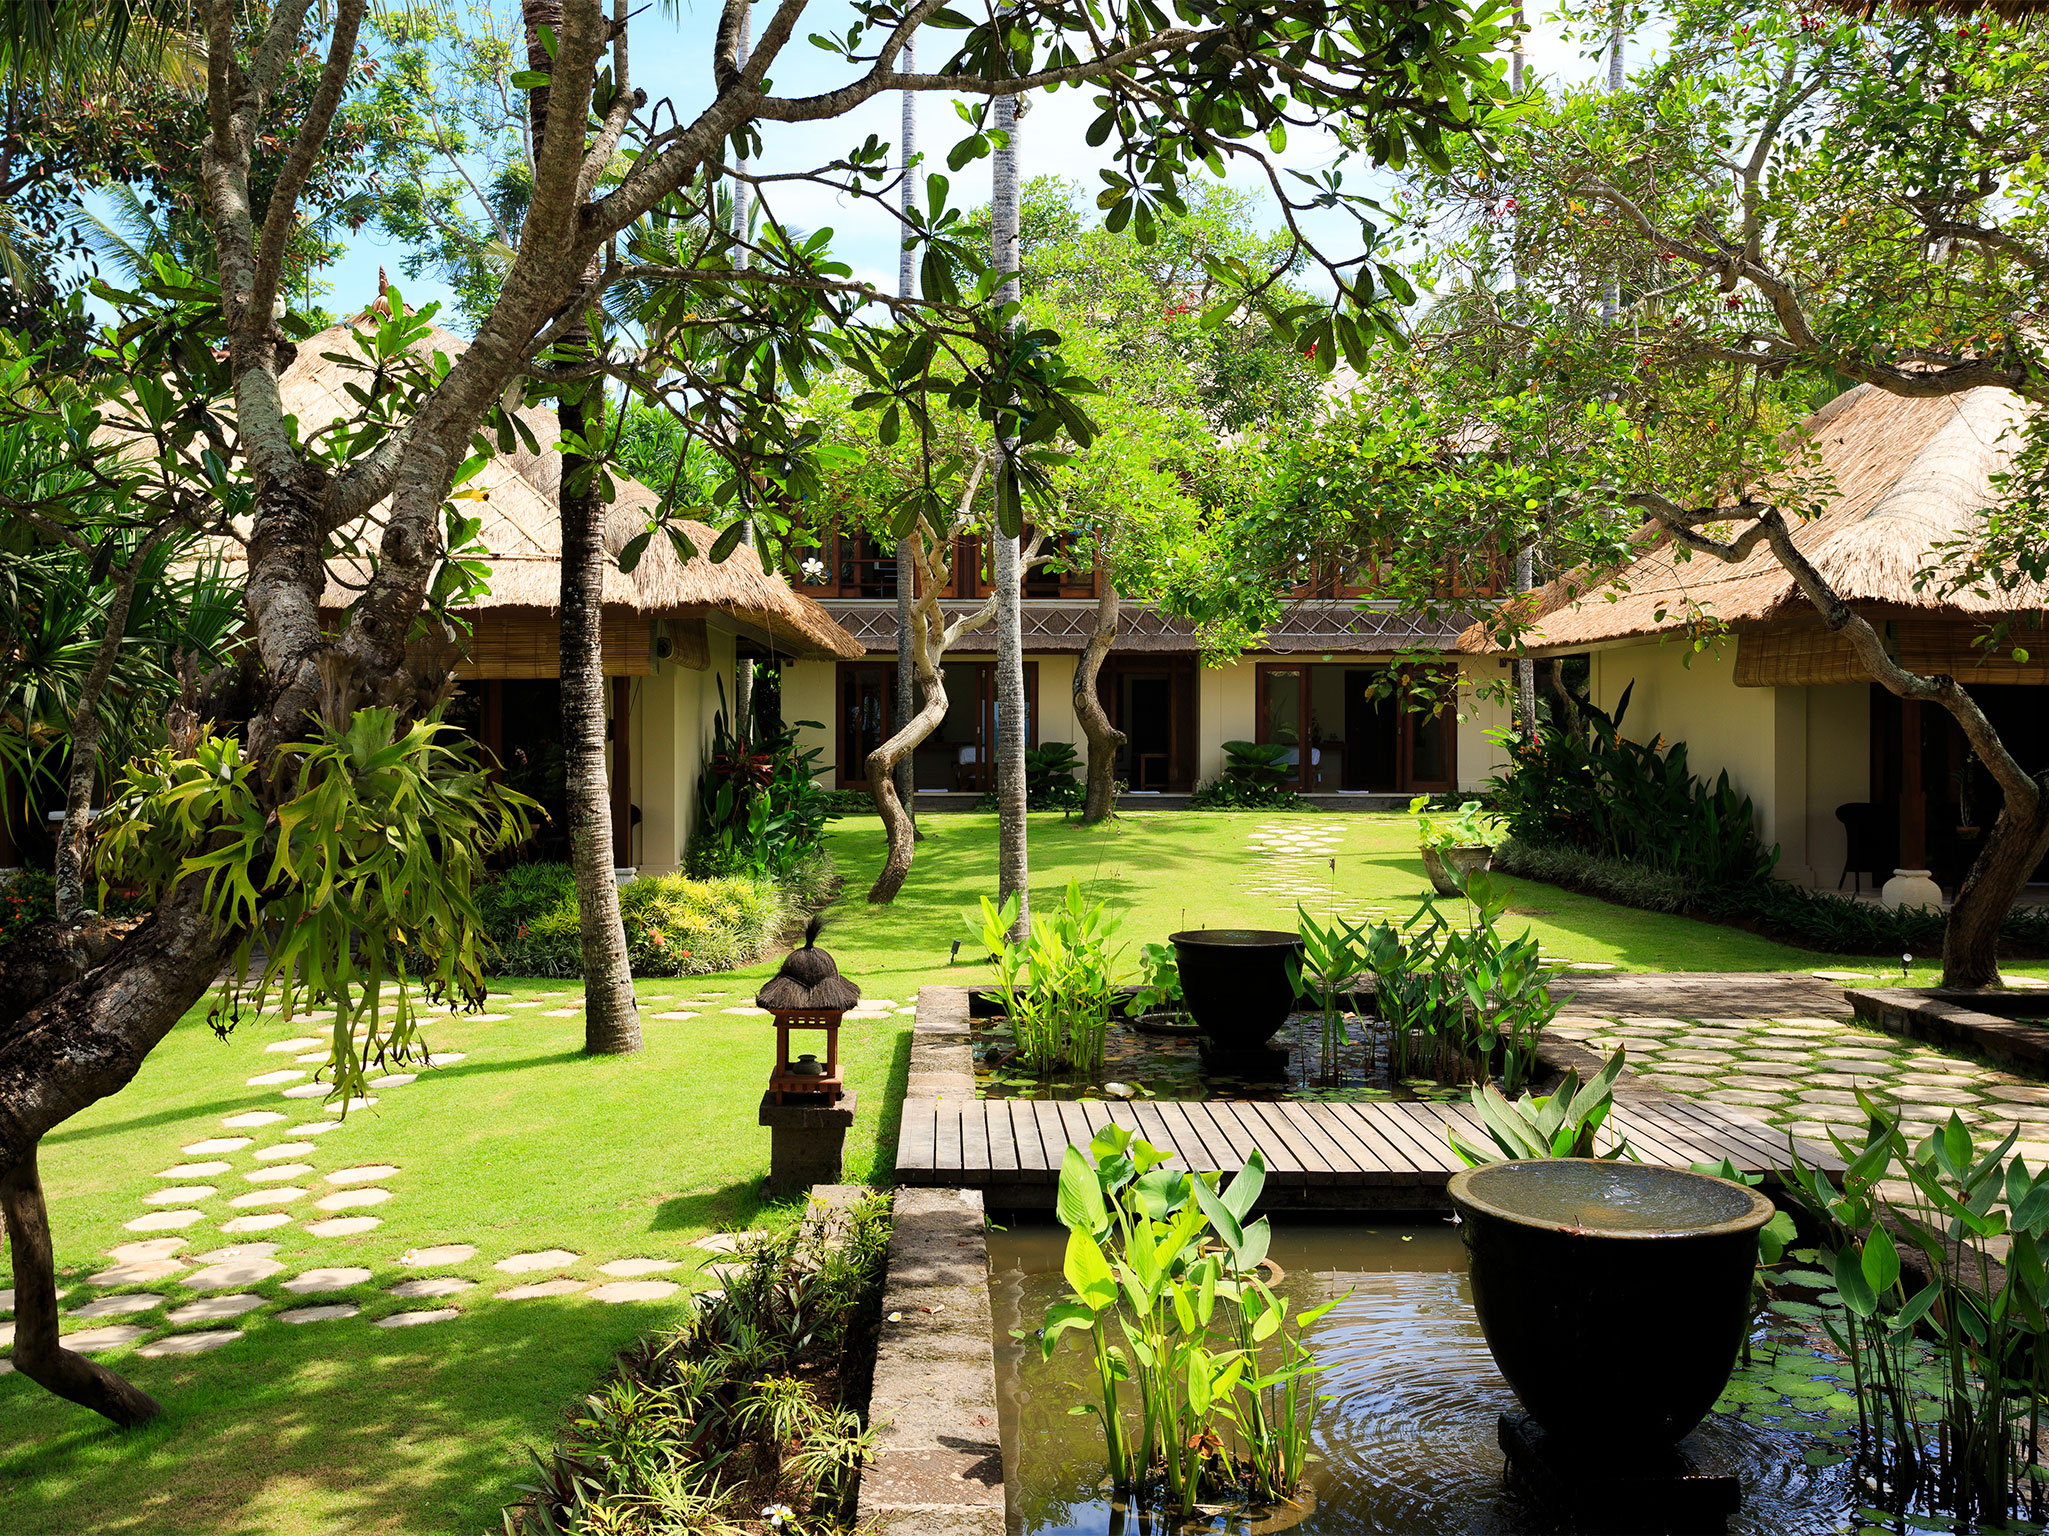 Villa Maridadi - Sanctuary in the tropics - Villa Maridadi, Seseh-Tanah Lot, Bali